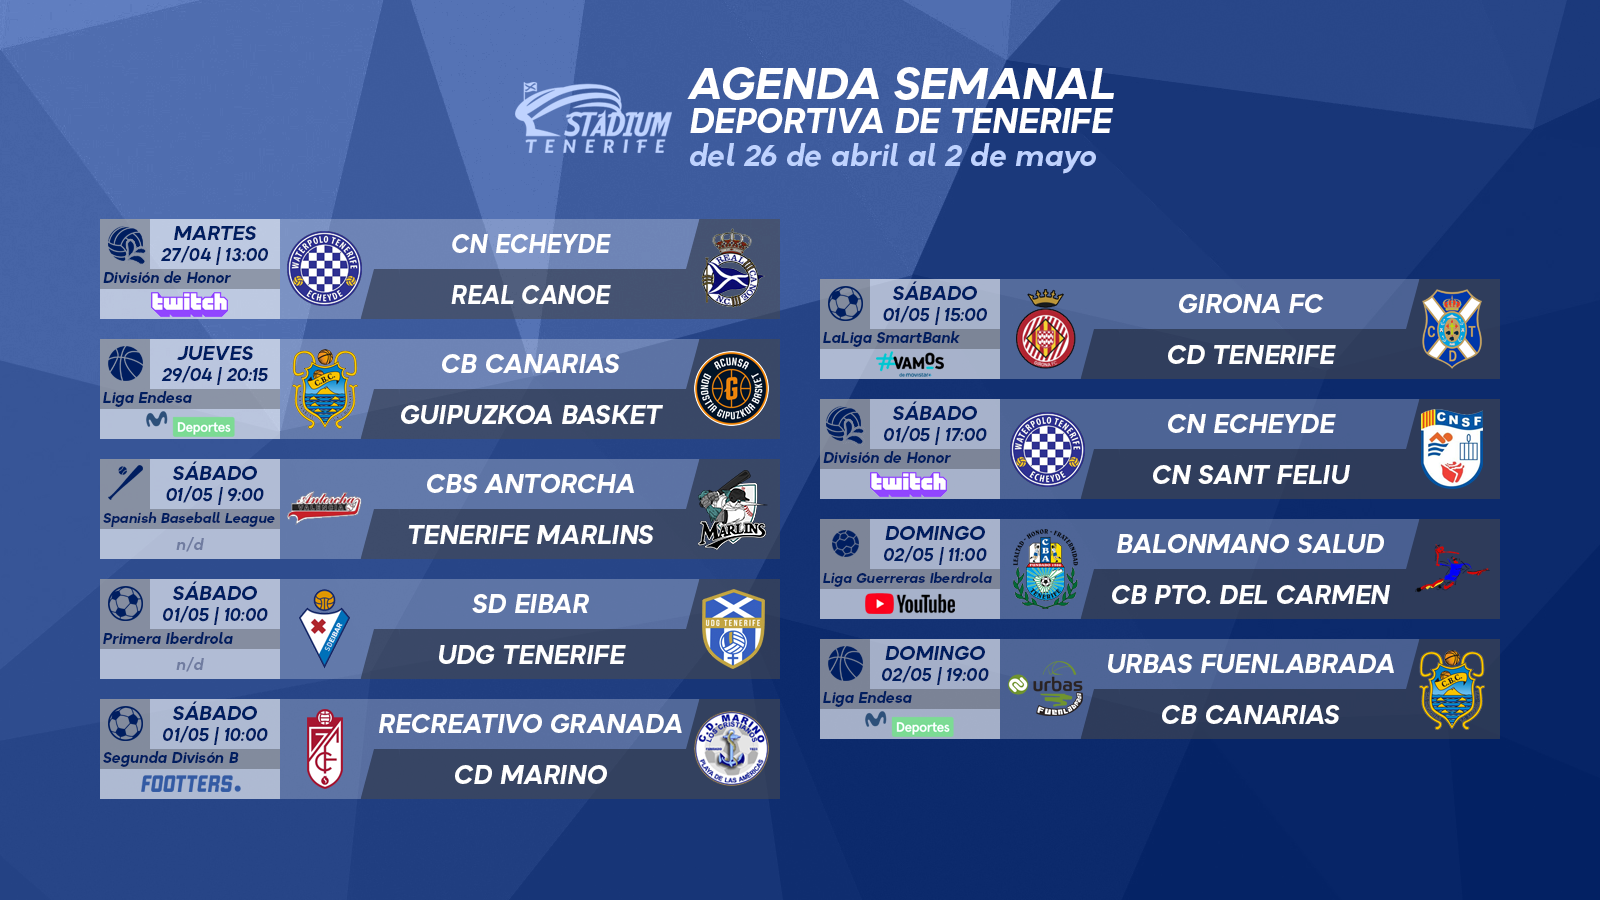 Agenda Semanal Deportiva de Tenerife (26 de abril al 2 de abril)